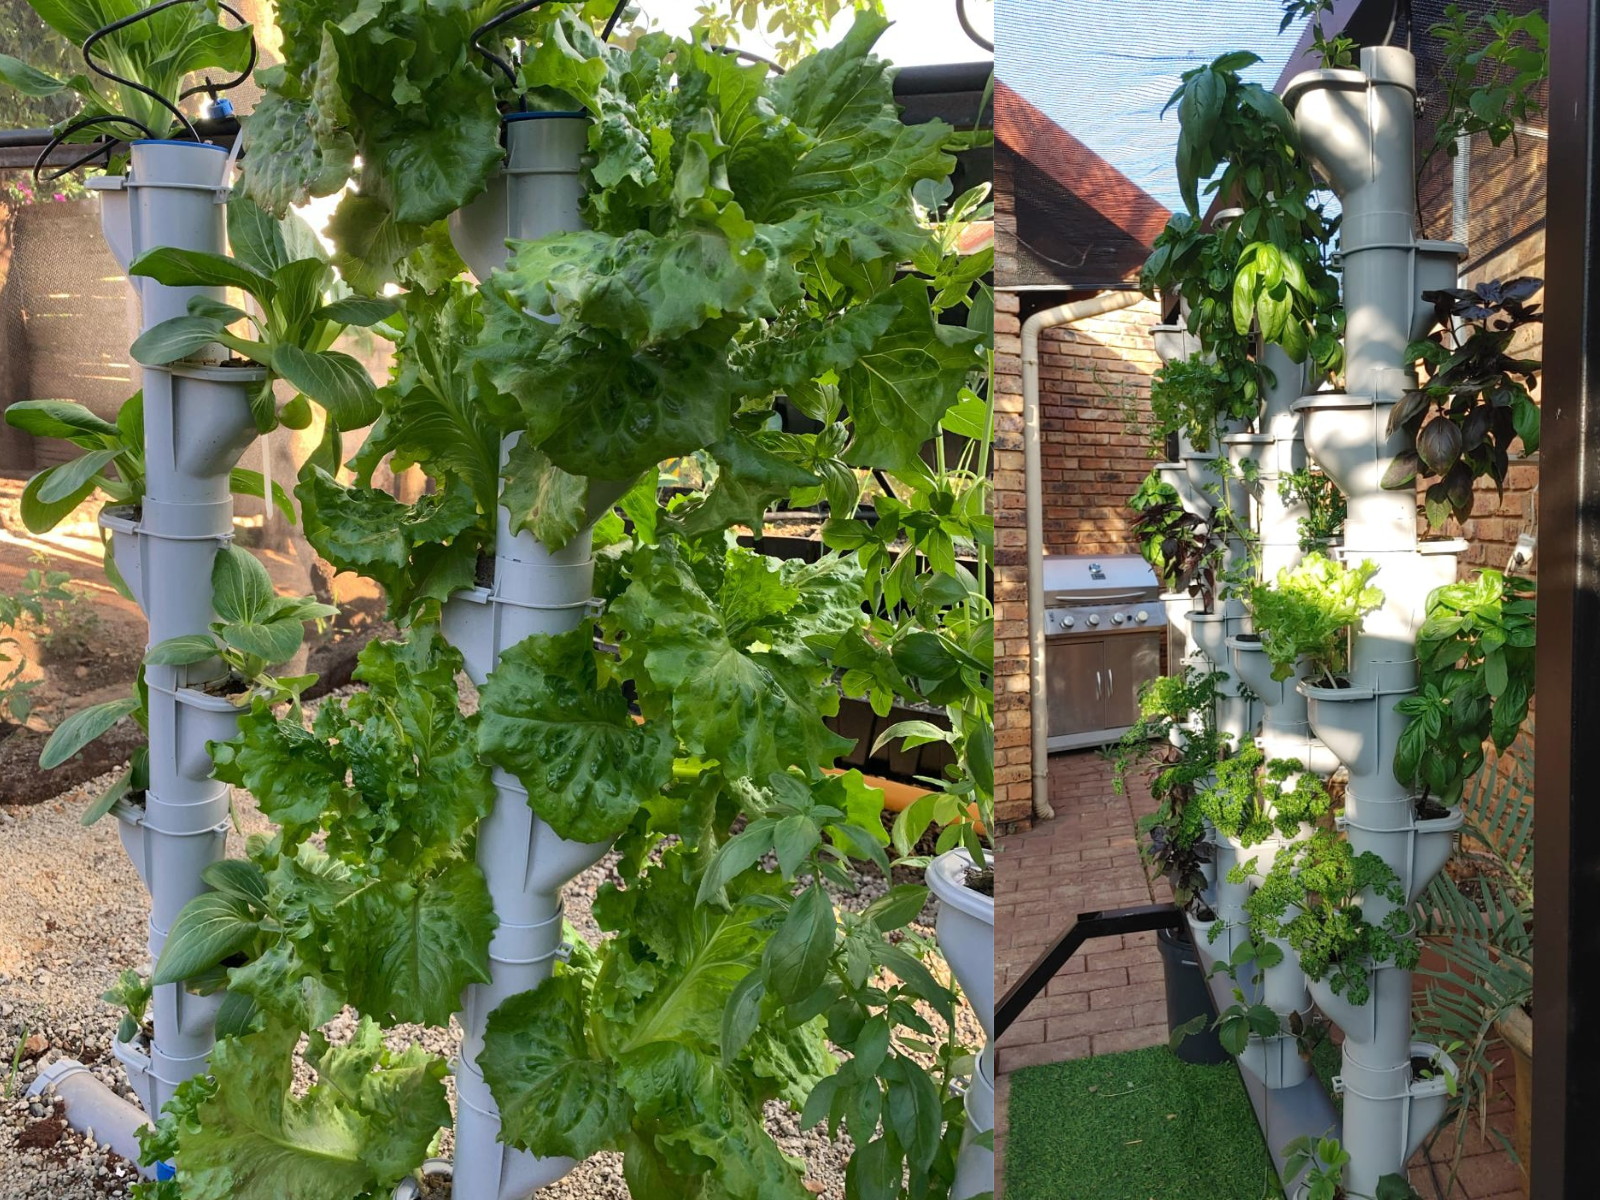 Vertical farming at home